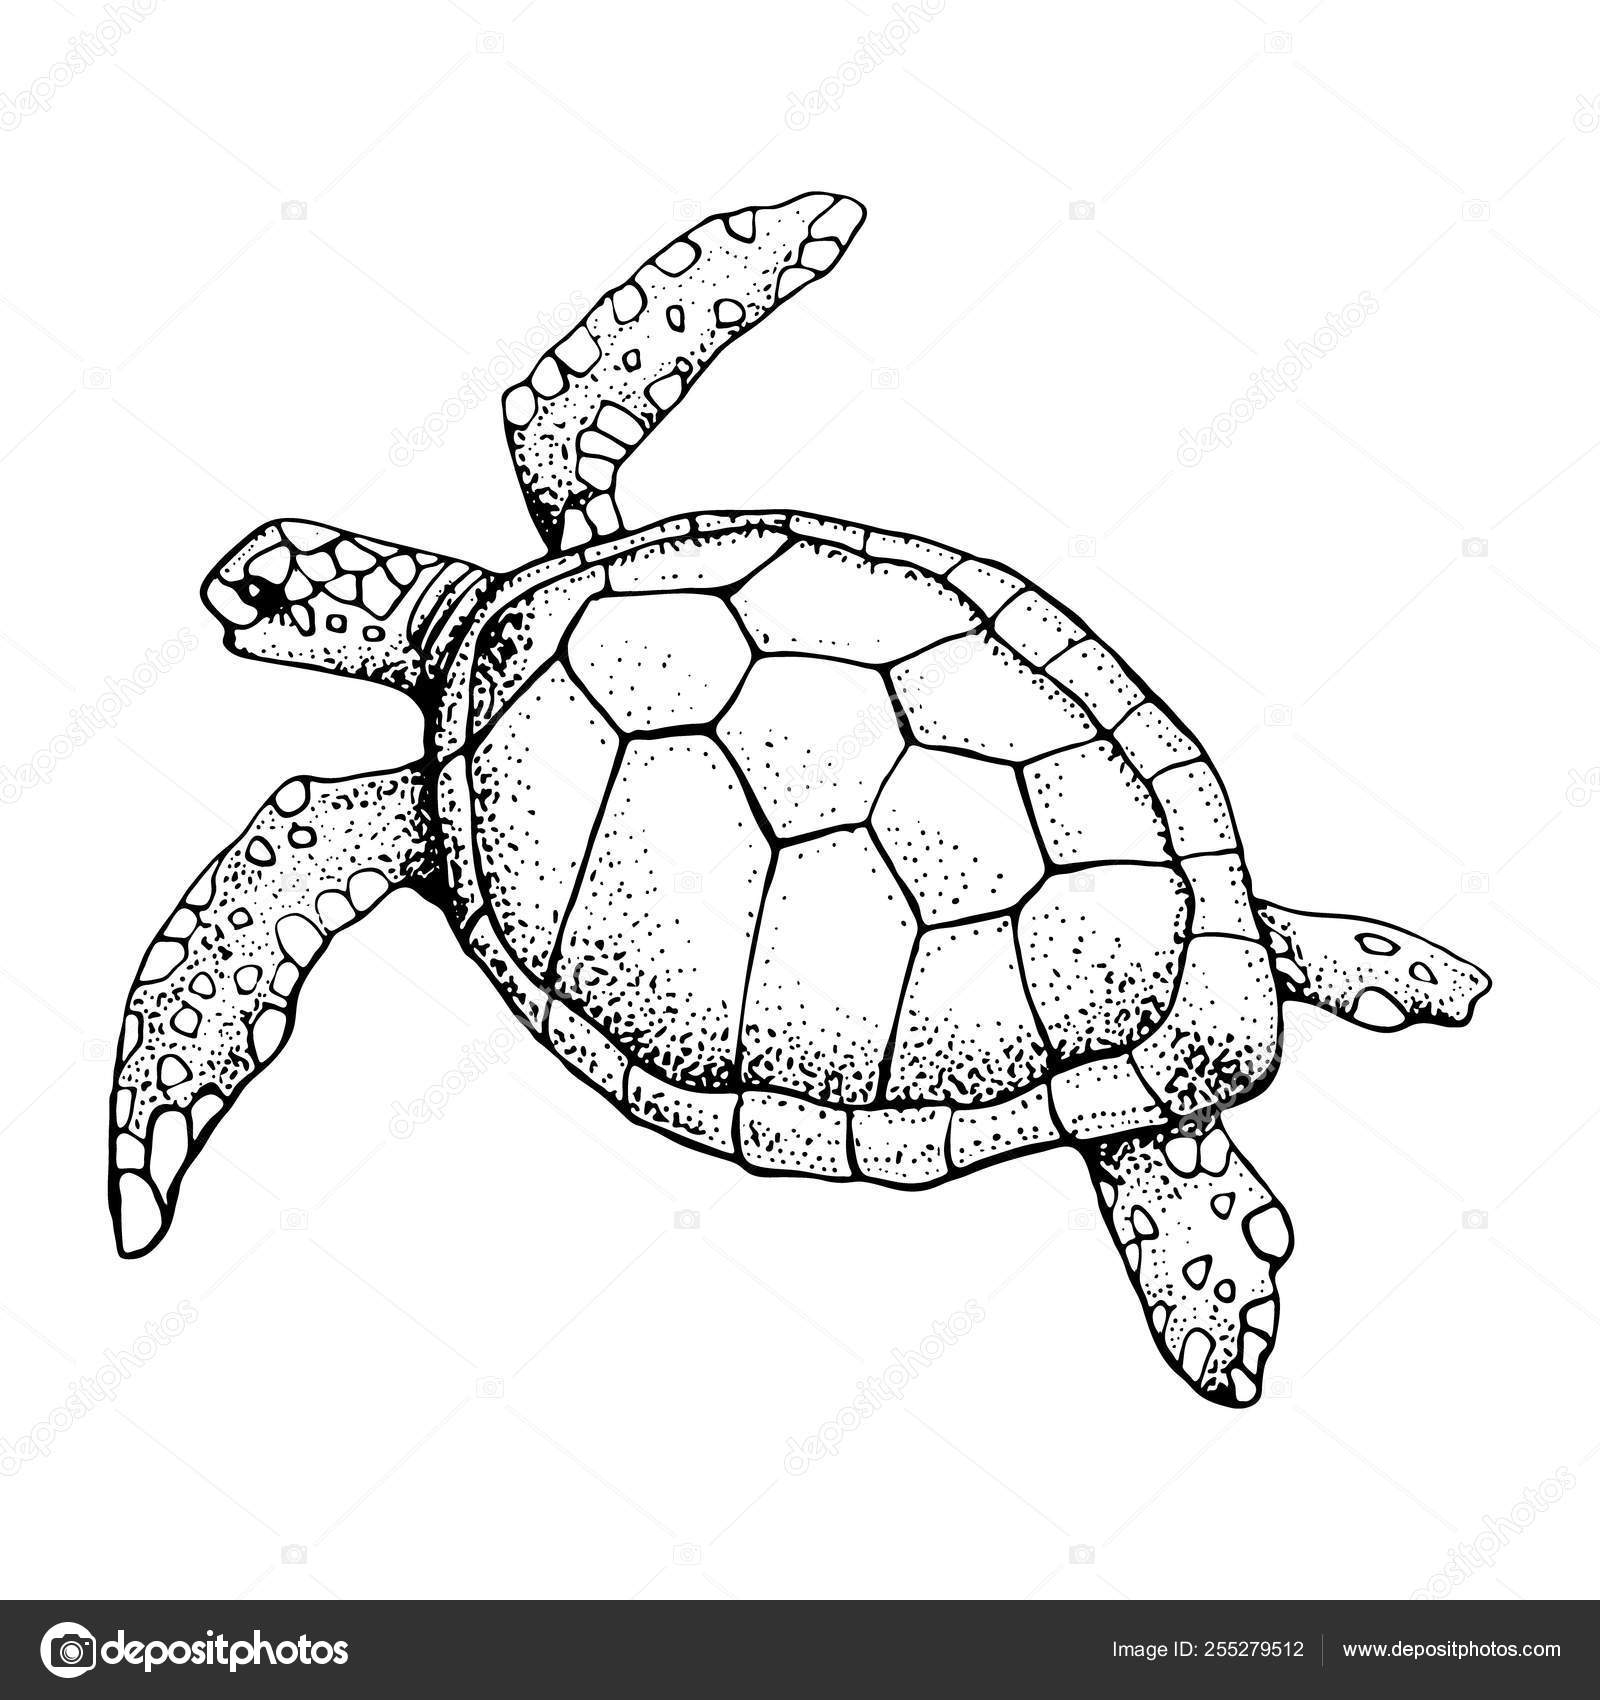 https://st4.depositphotos.com/3581215/25527/v/1600/depositphotos_255279512-stock-illustration-hand-drawn-sea-turtle-isolated.jpg